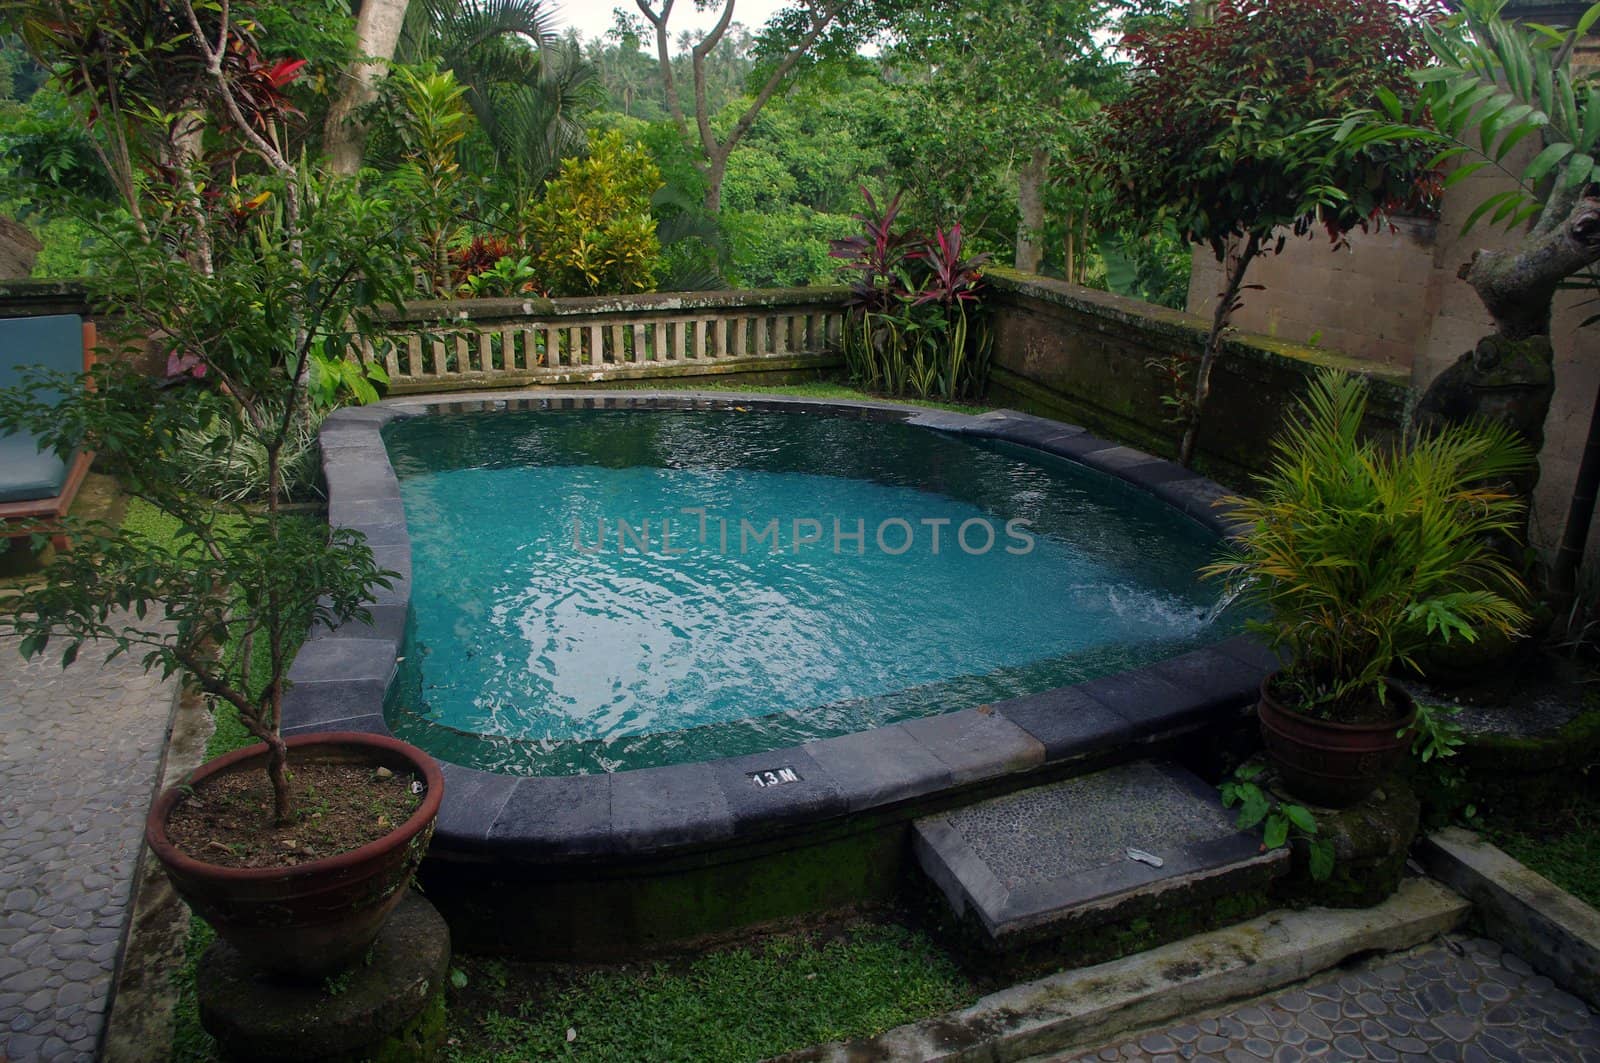 Swimming pool in garden villa, Ubud, Bali, Indonesia.